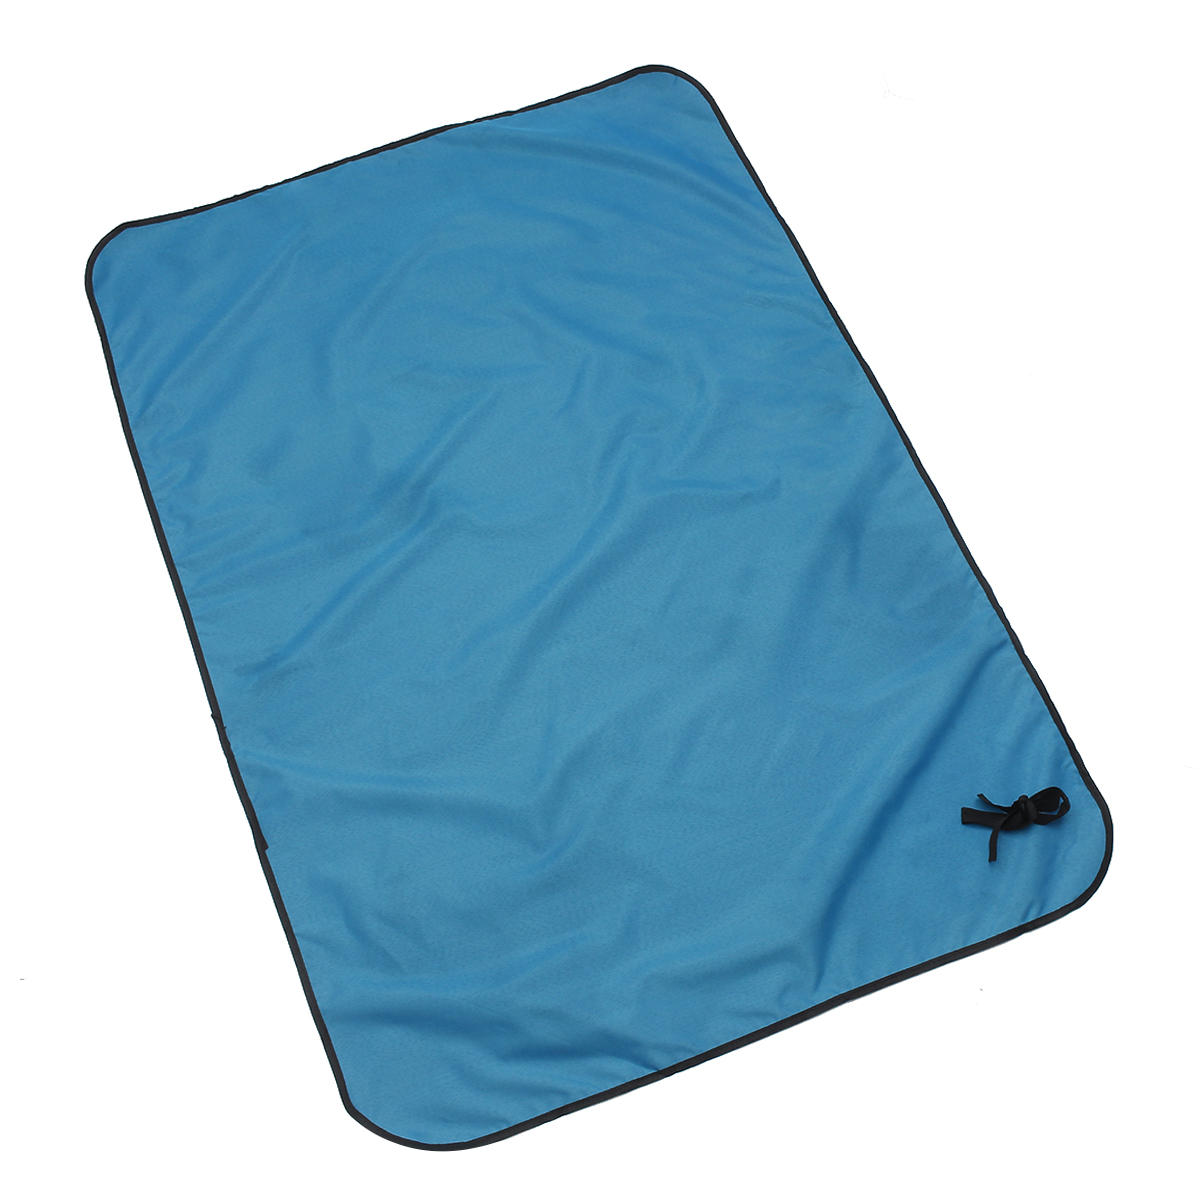 200x150cm-Picnic-Mat-Sleeping-Blanket-Outdoor-Camping-Travel-Waterproof-Beach-Pad-1532100-2